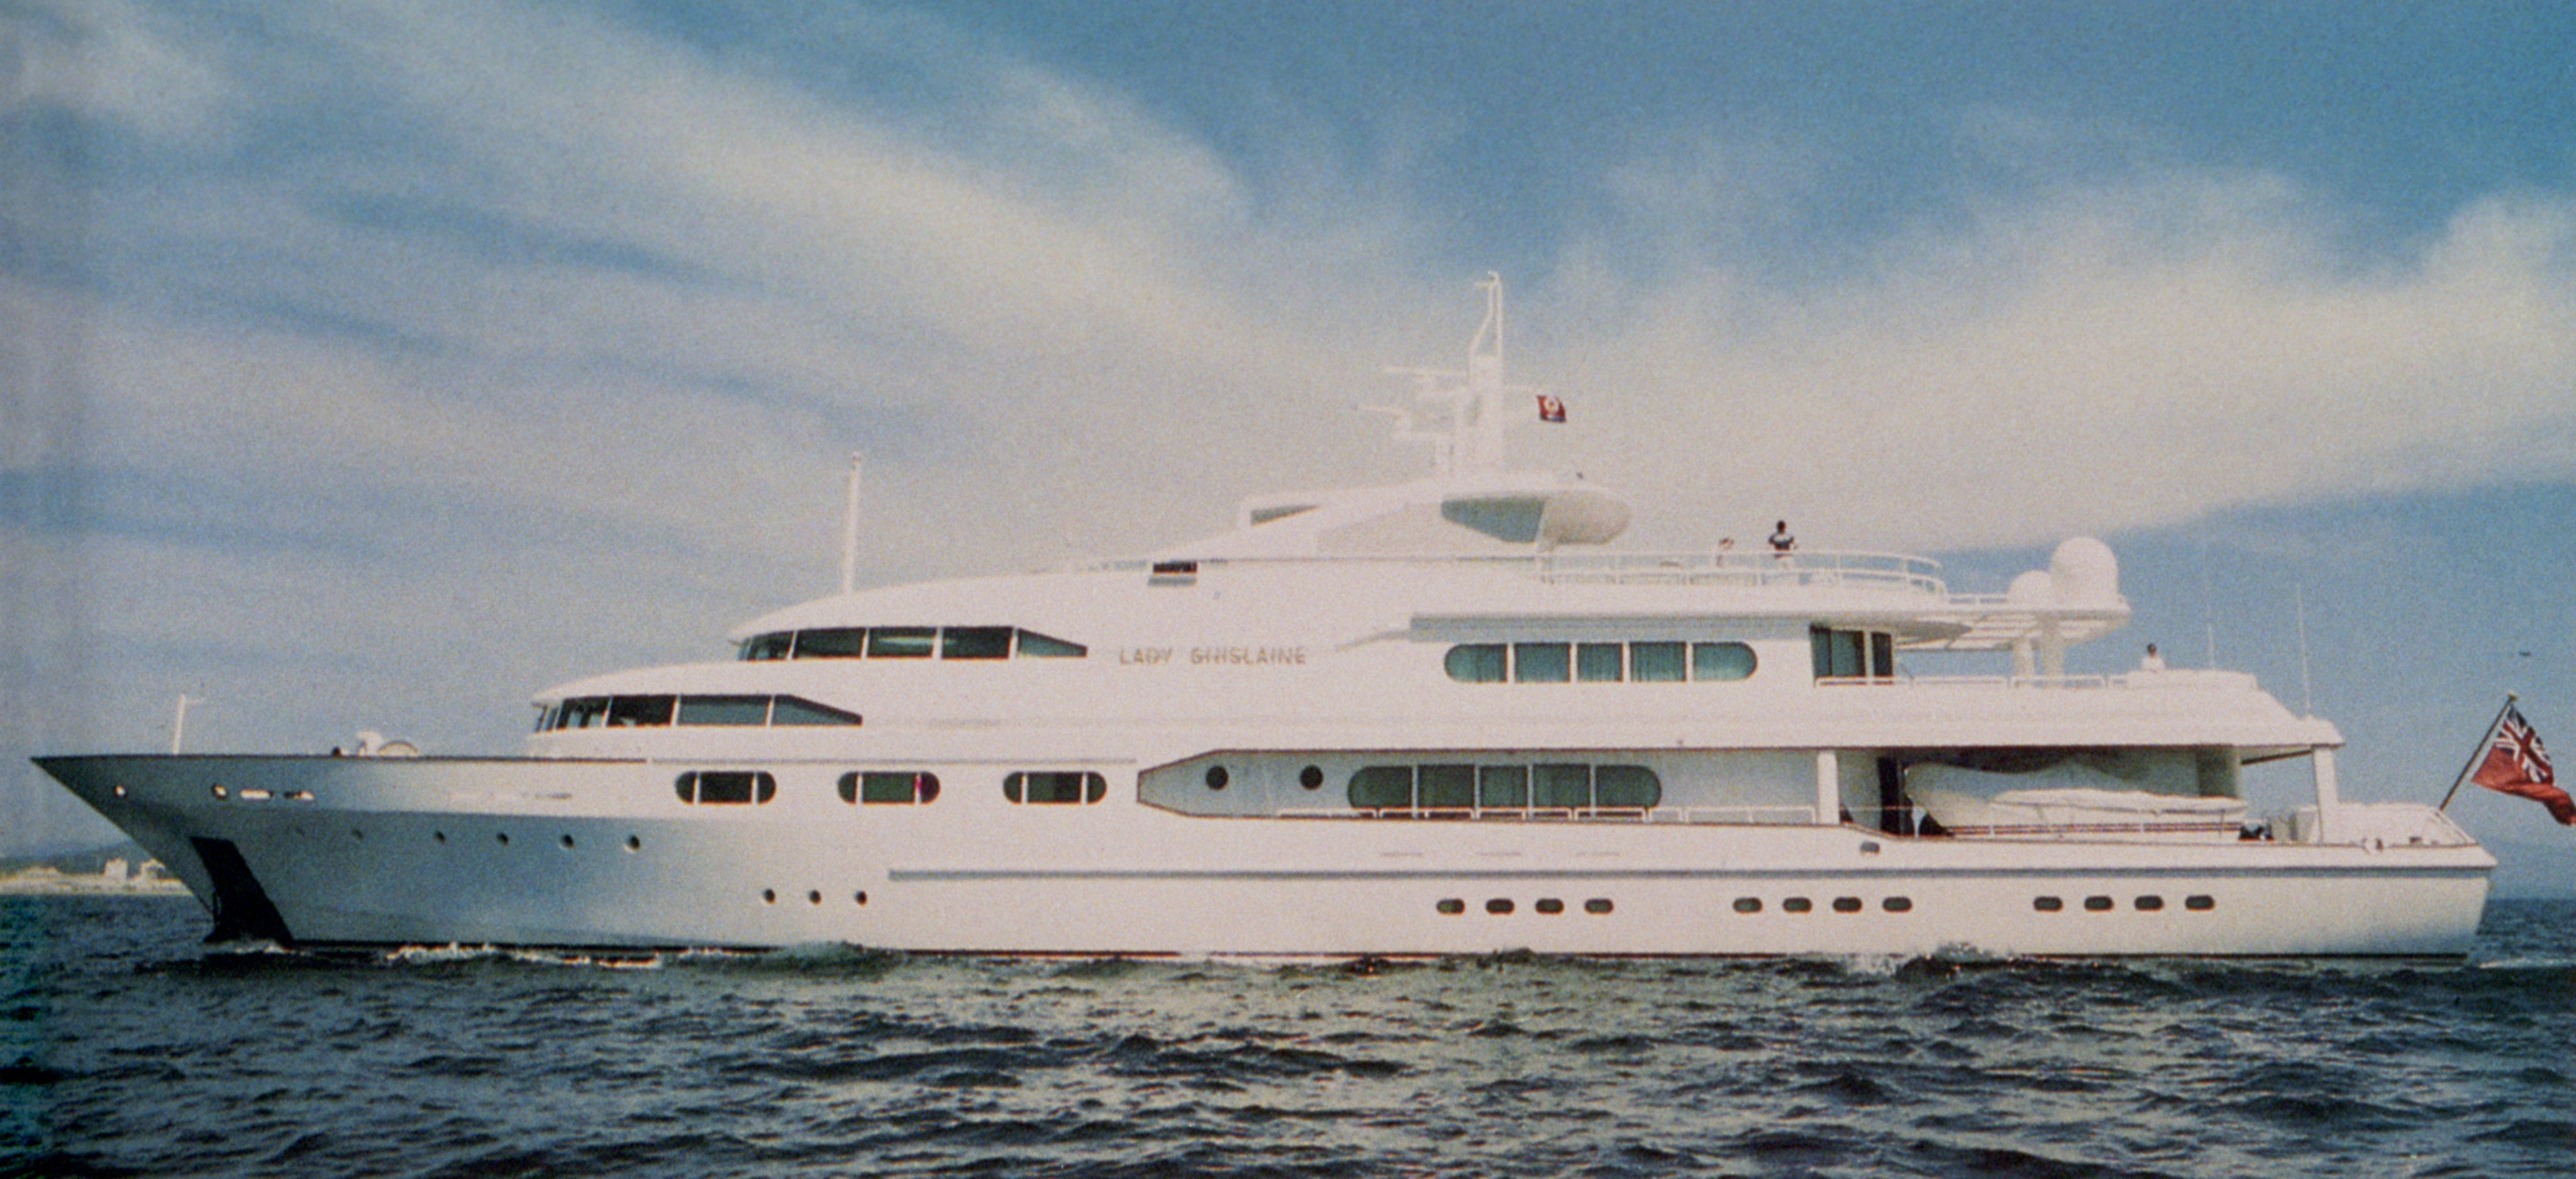 The Lady Ghislaine super yacht